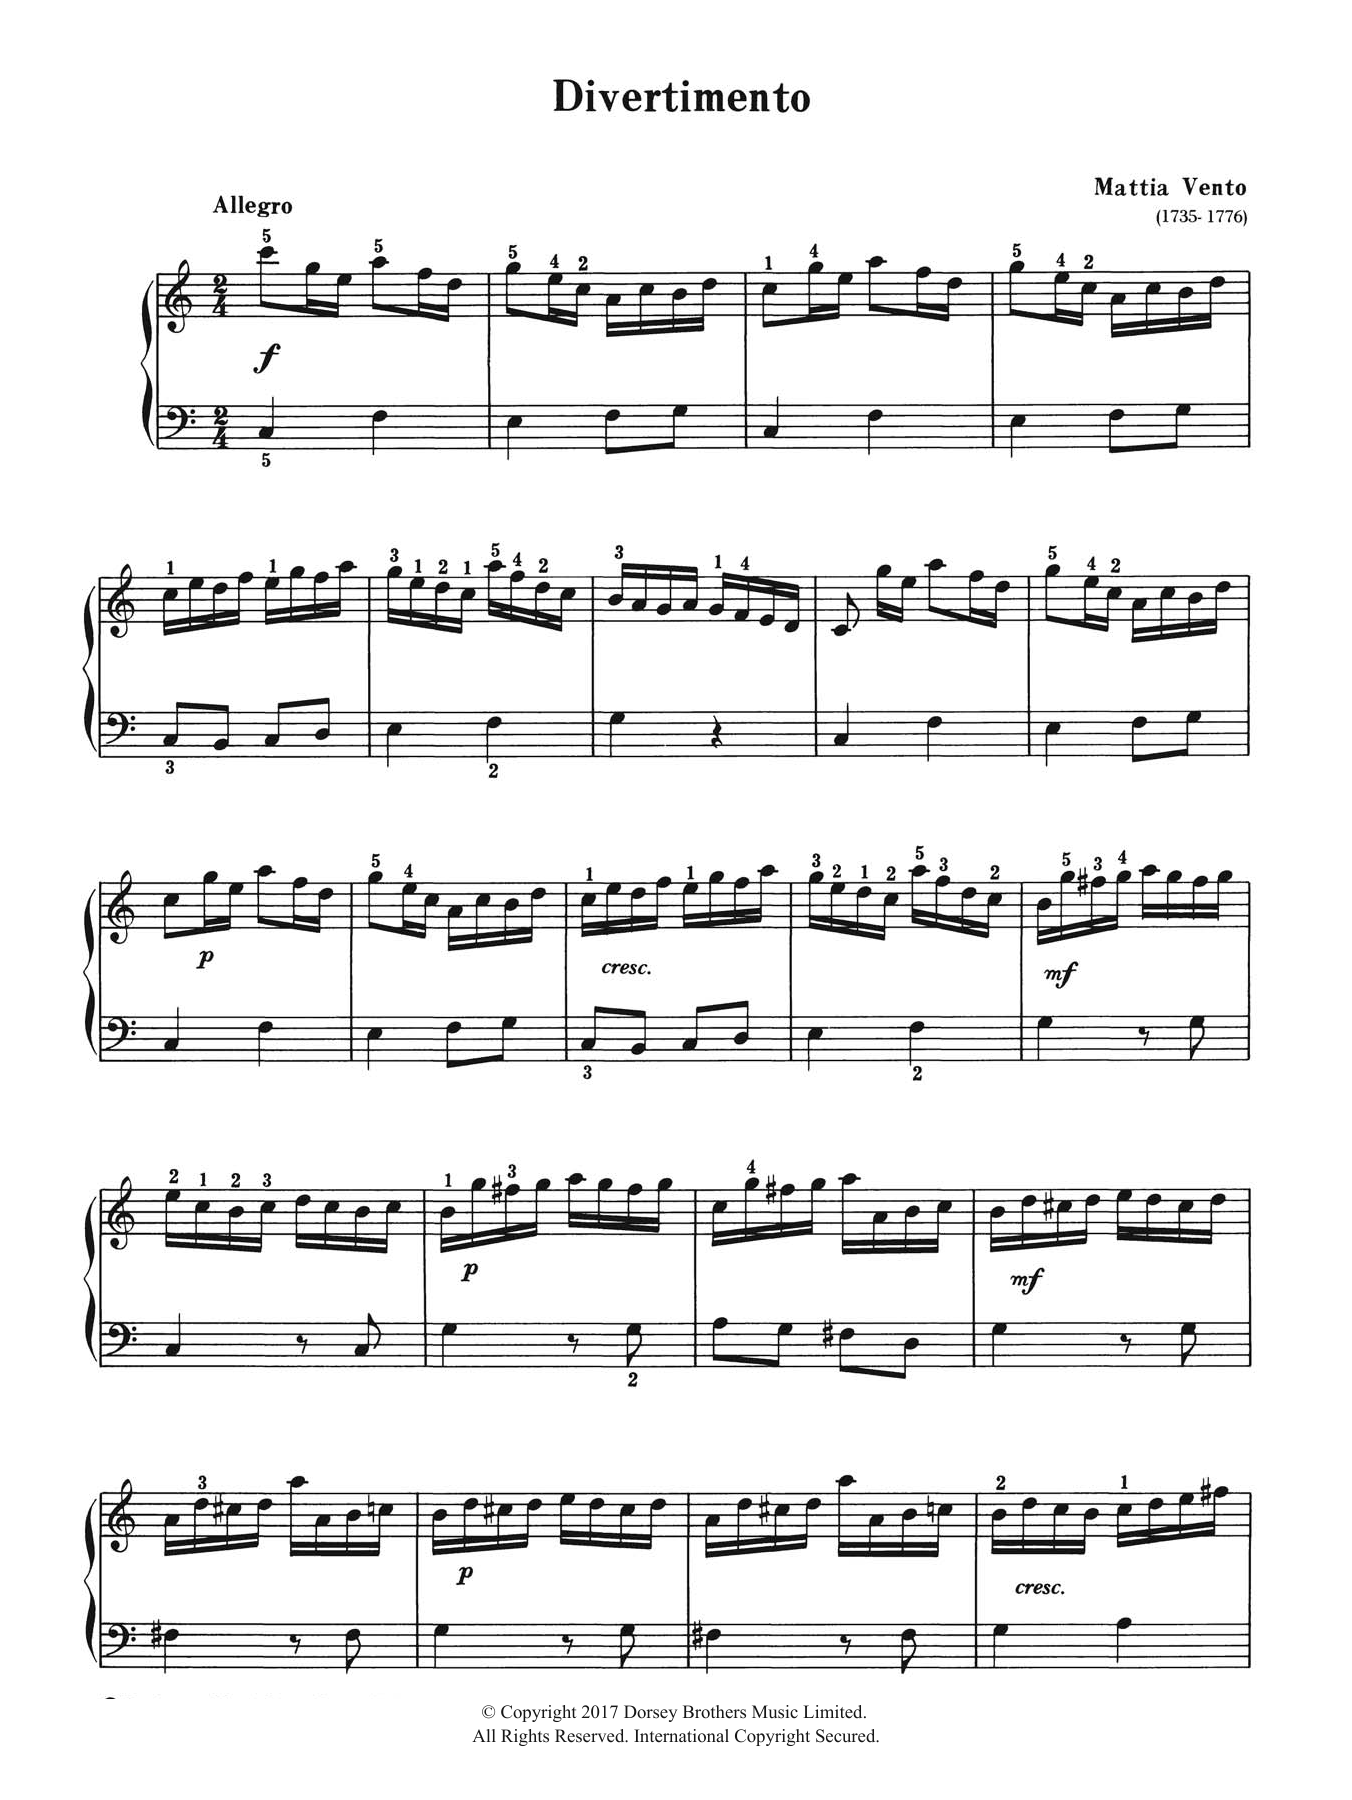 Mattia Vento Divertimento Sheet Music Notes & Chords for Piano - Download or Print PDF